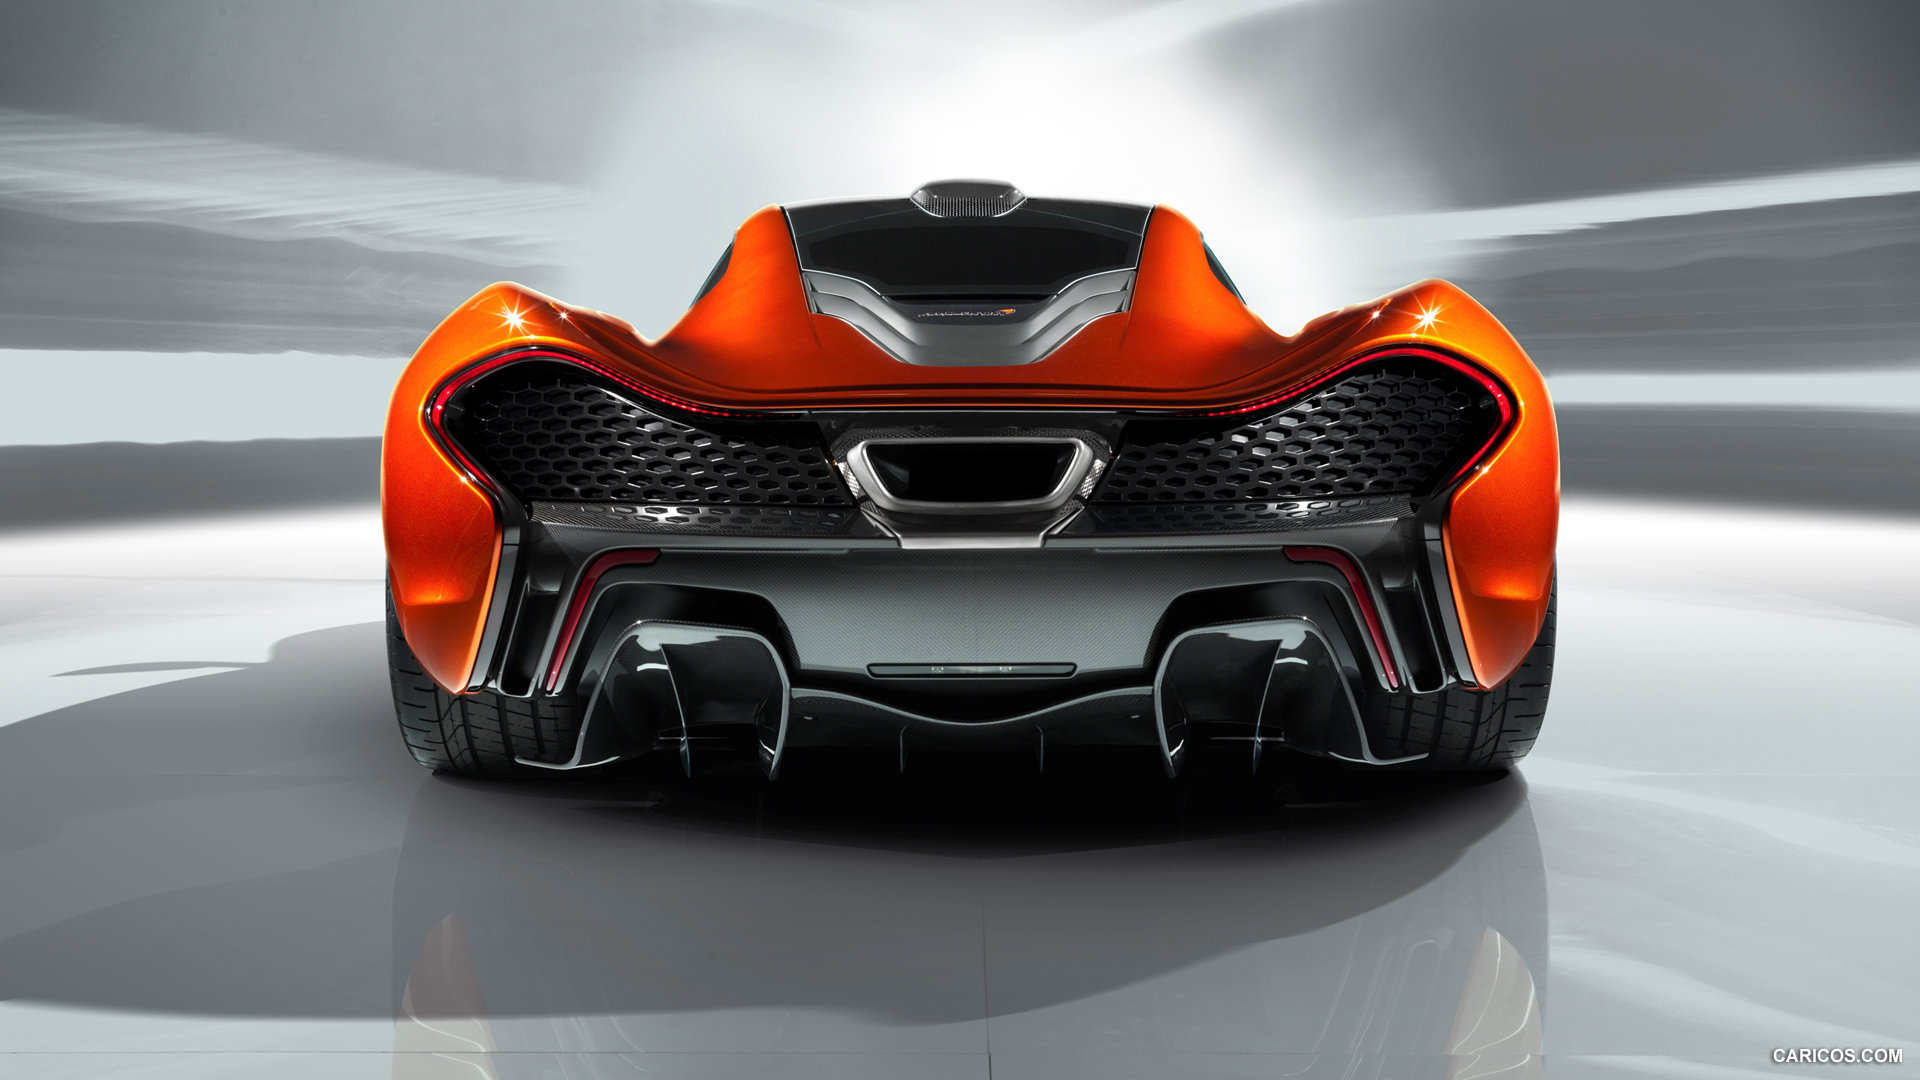 2012 McLaren P1 Concept  - Rear, #12 of 15